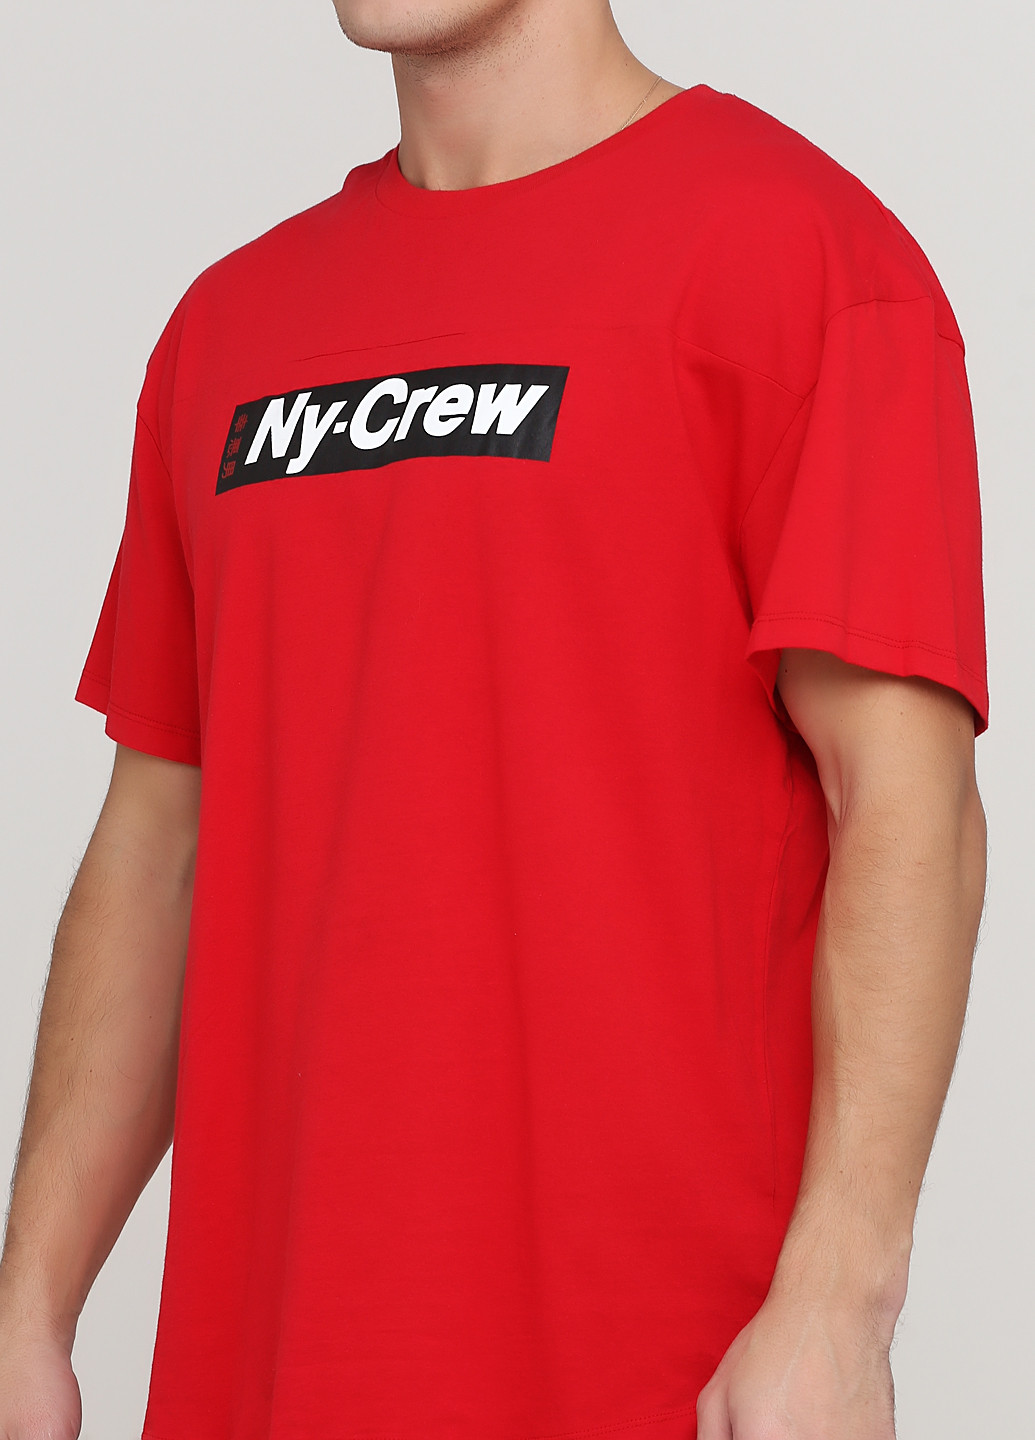 Красная футболка Terranova